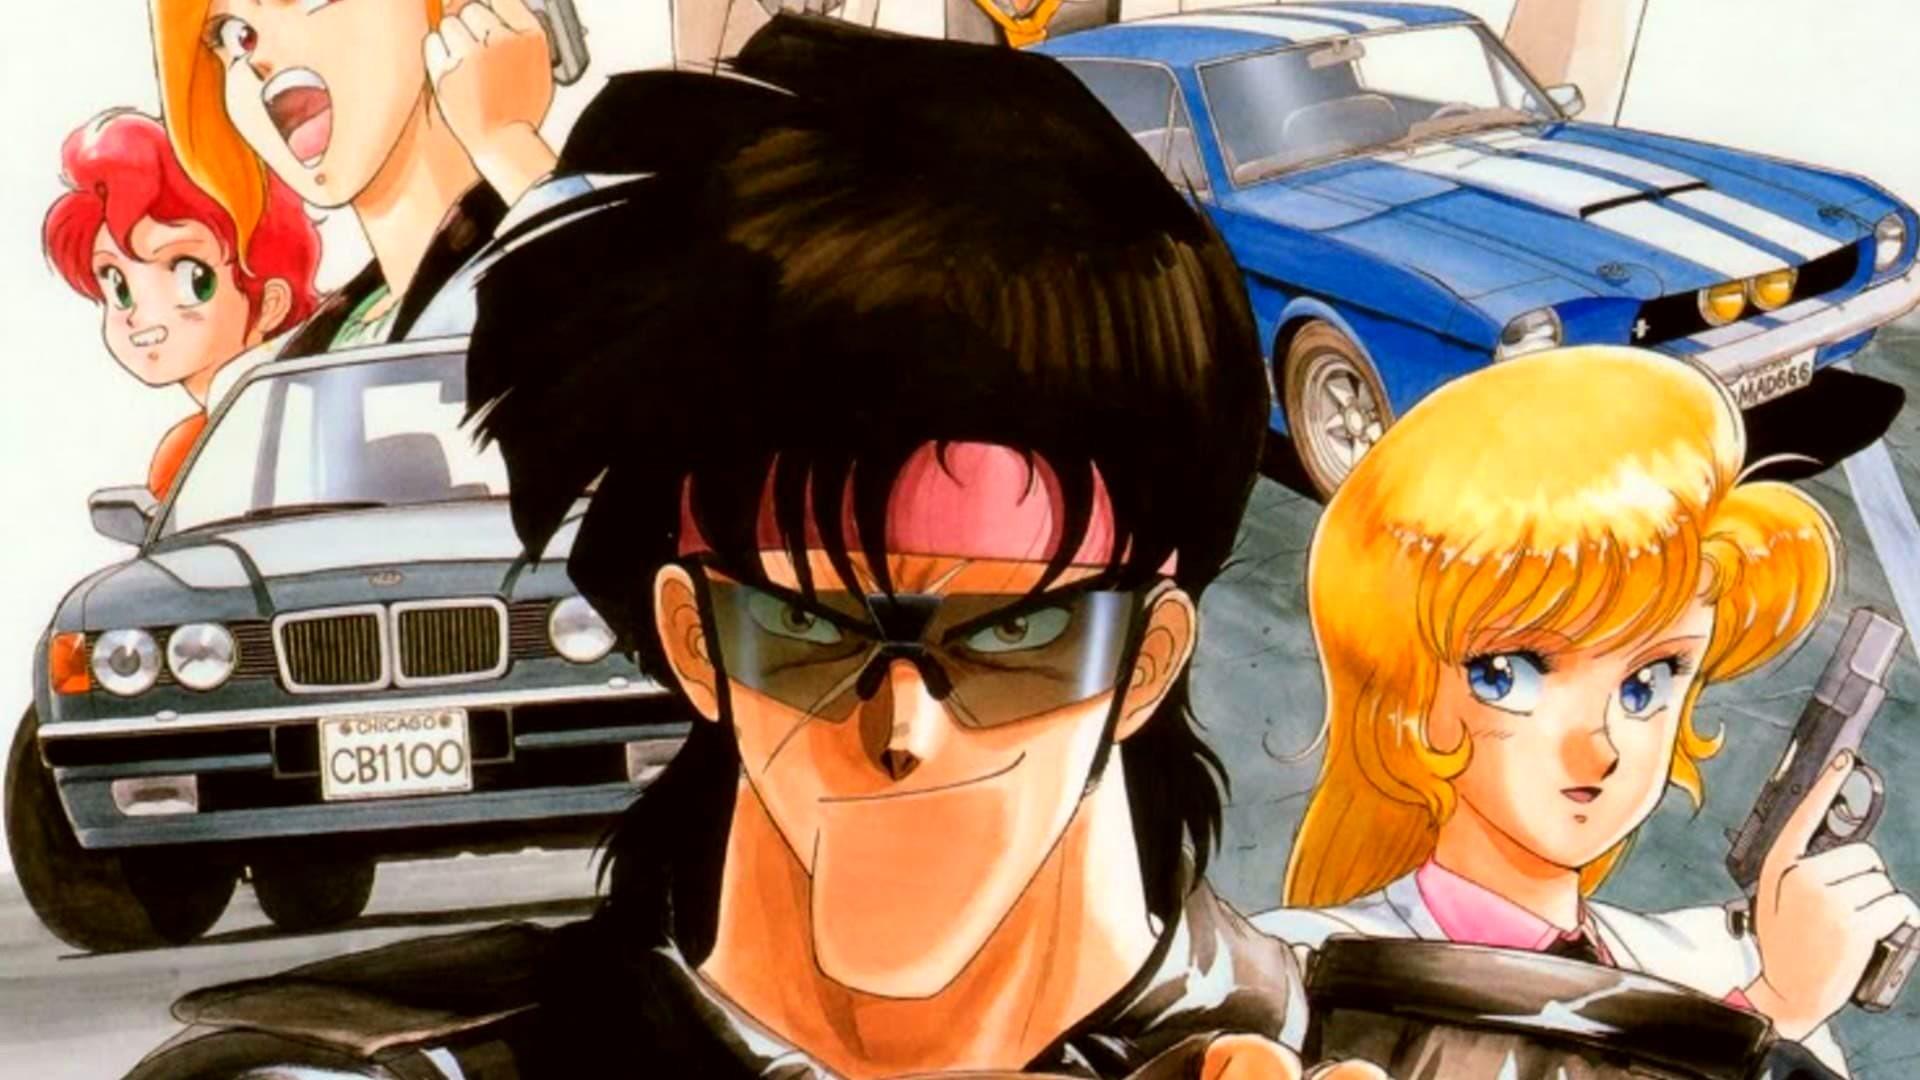 80s anime was so stylish